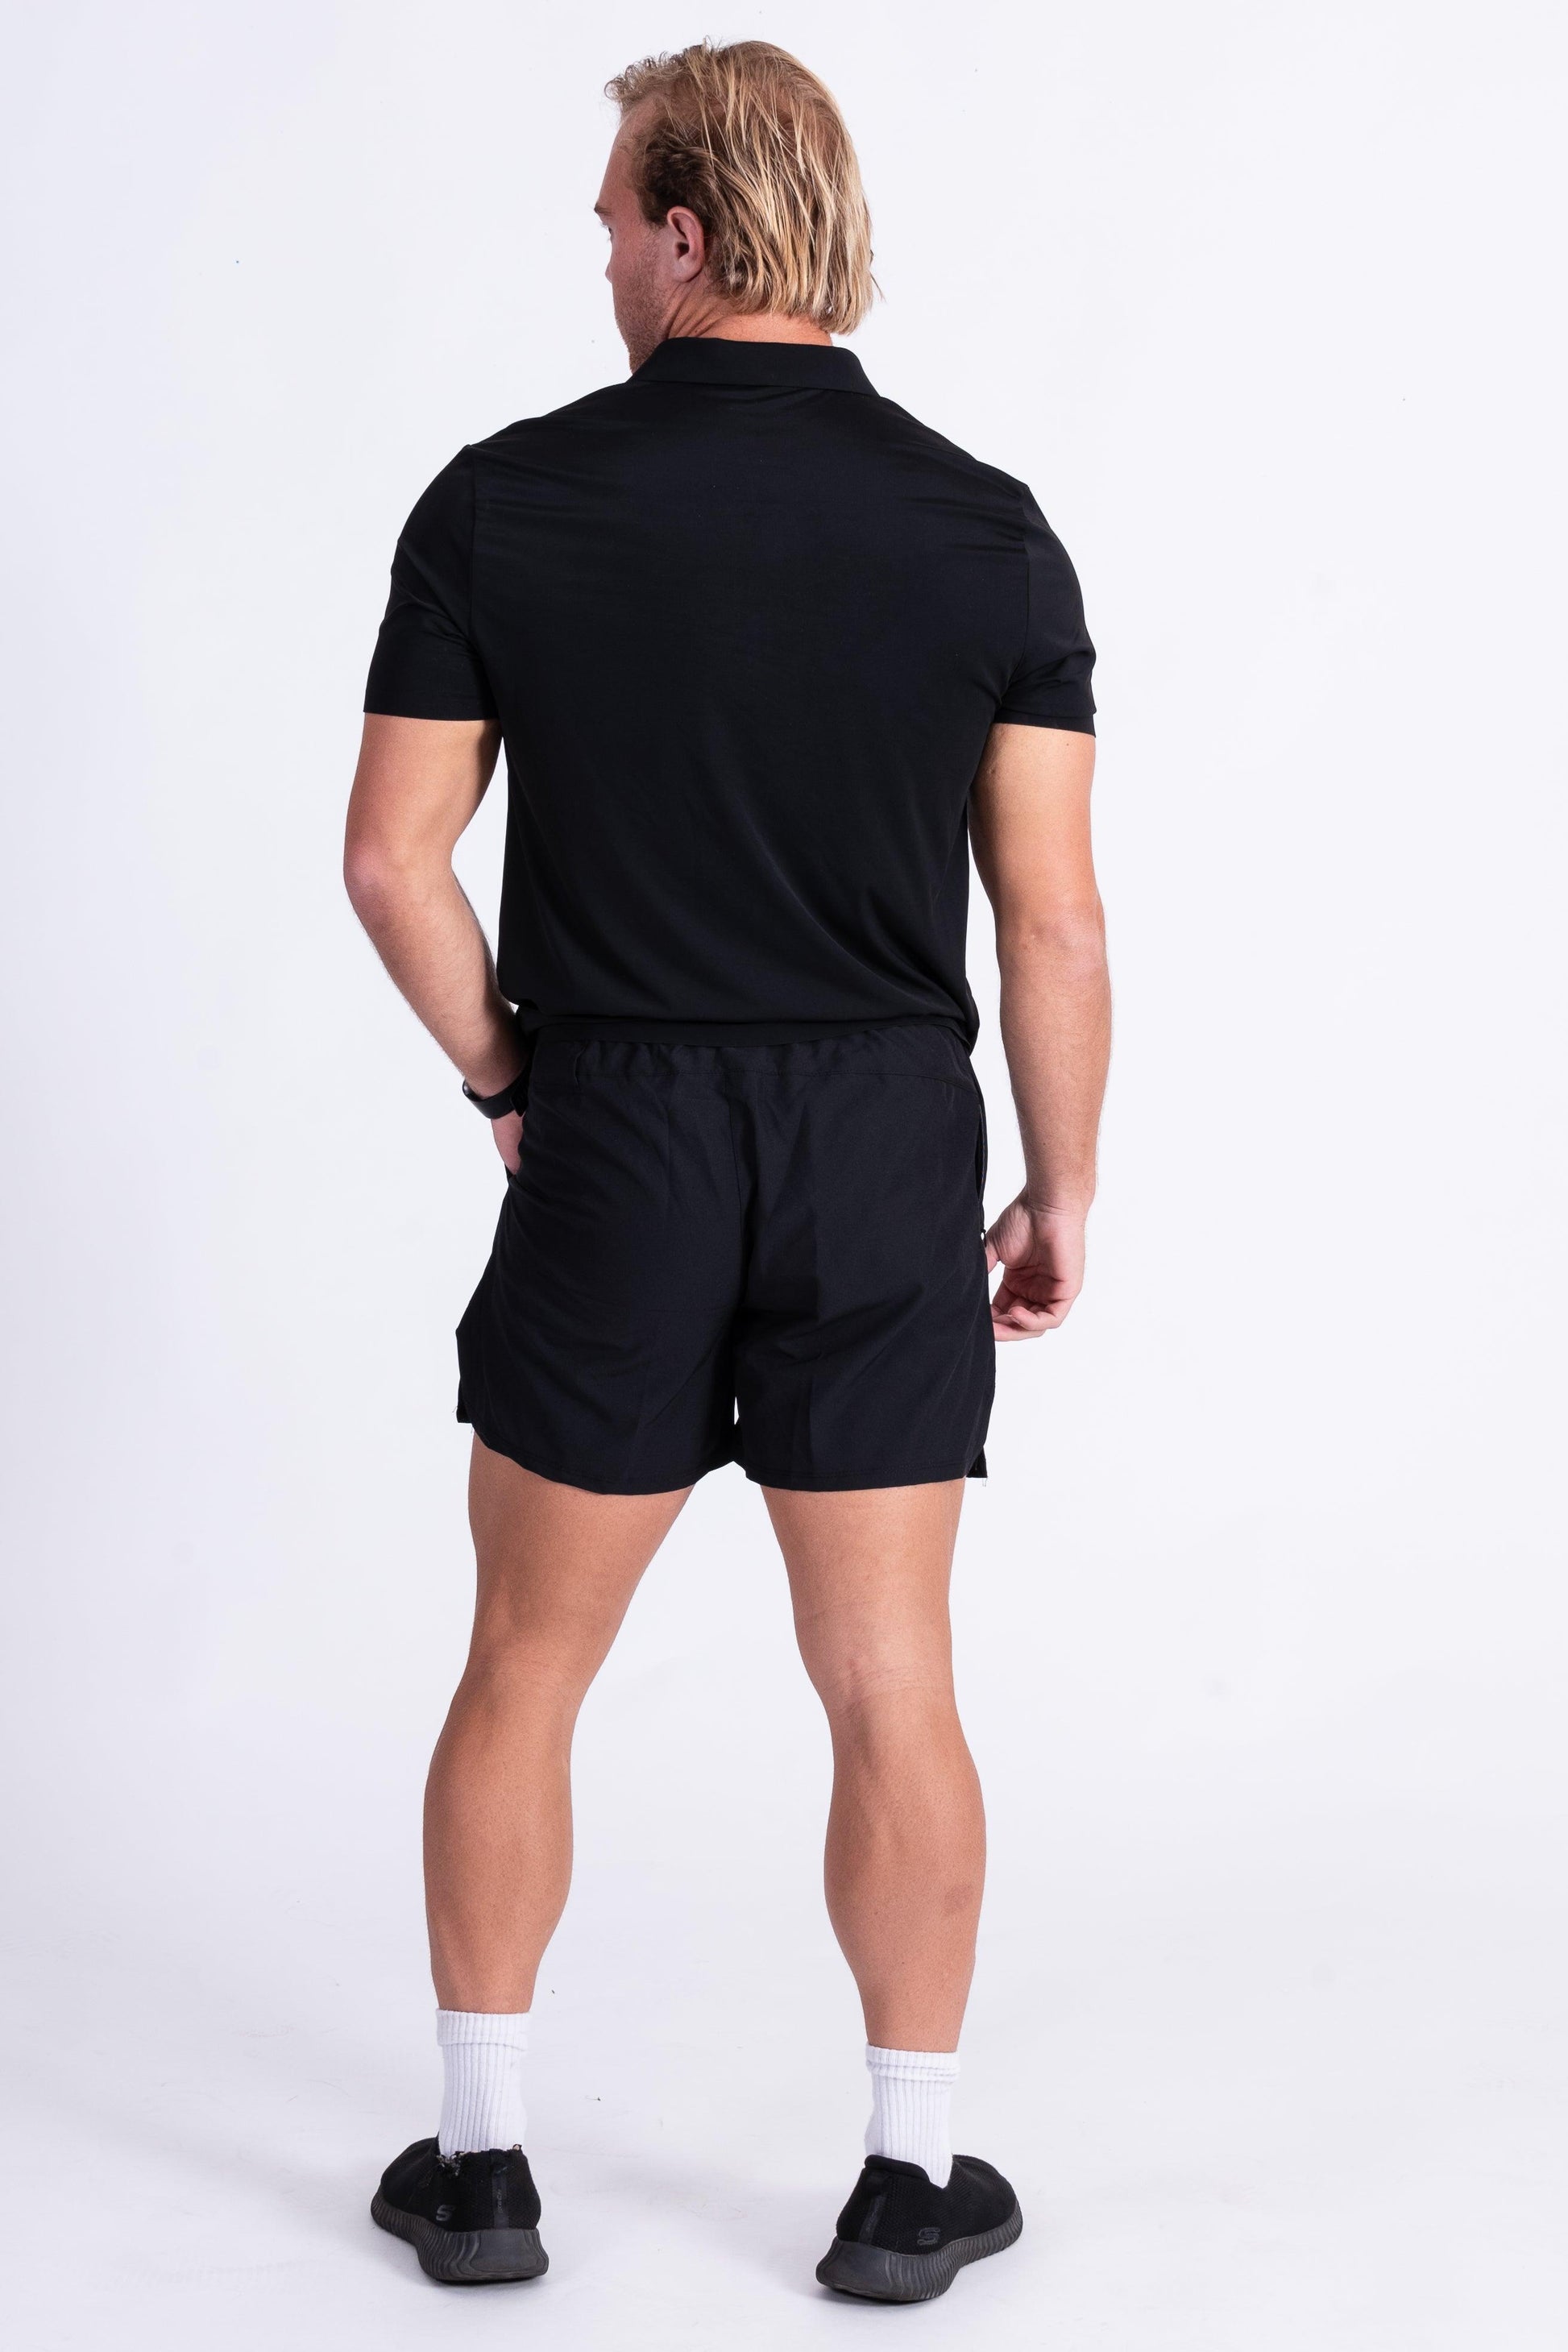 Effort 5" Shorts Black - builtwear